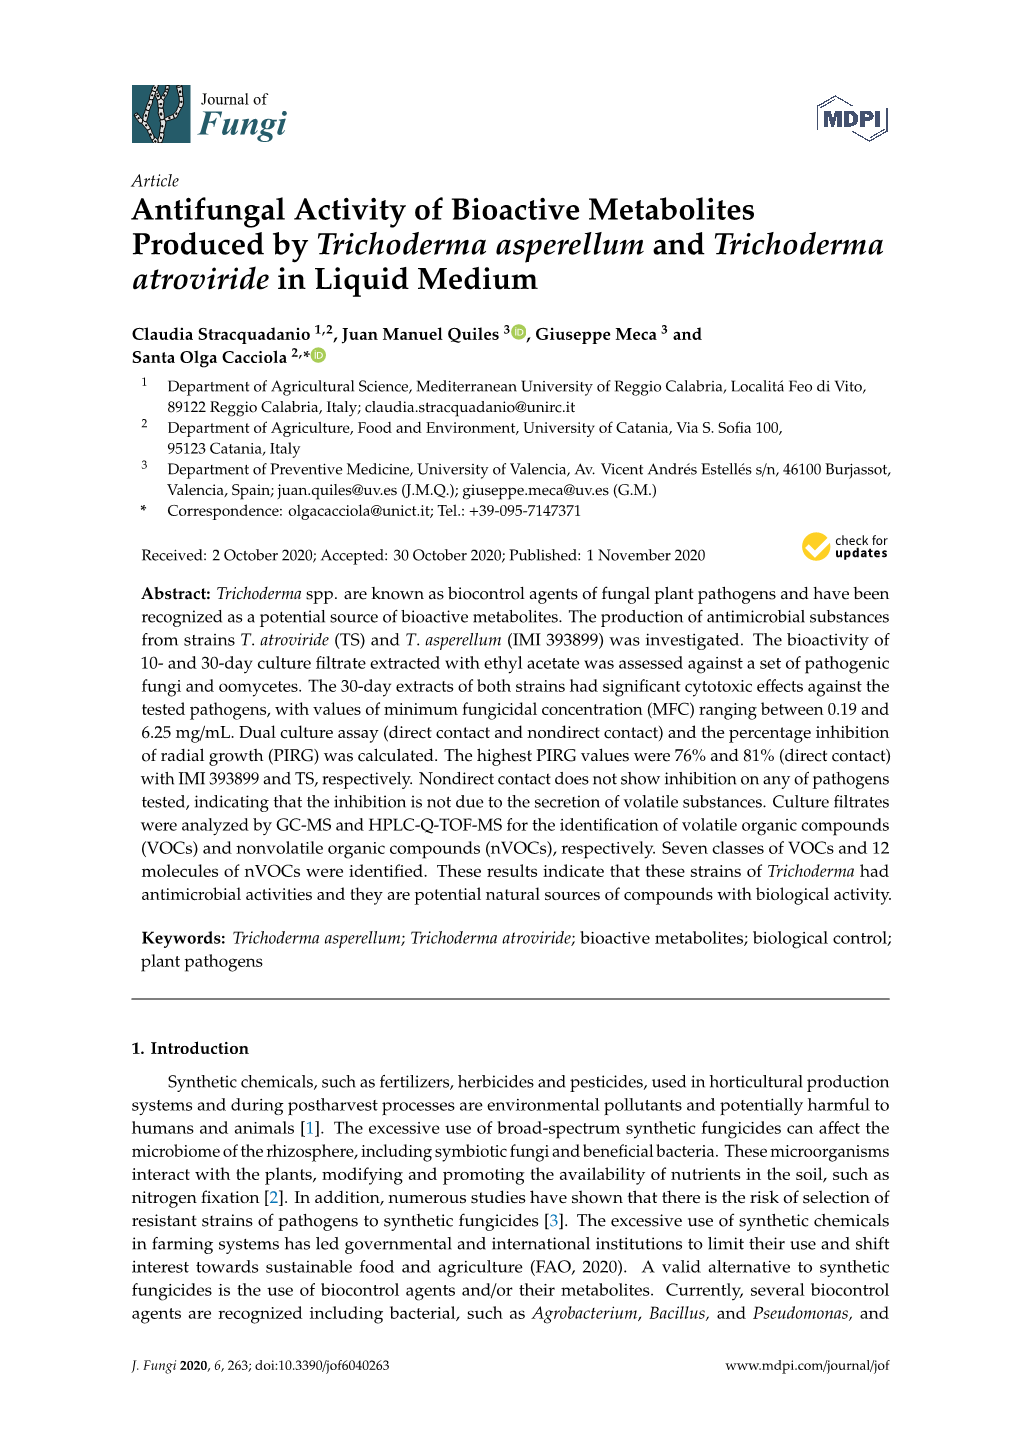 Antifungal Activity of Bioactive Metabolites Produced by Trichoderma Asperellum and Trichoderma Atroviride in Liquid Medium